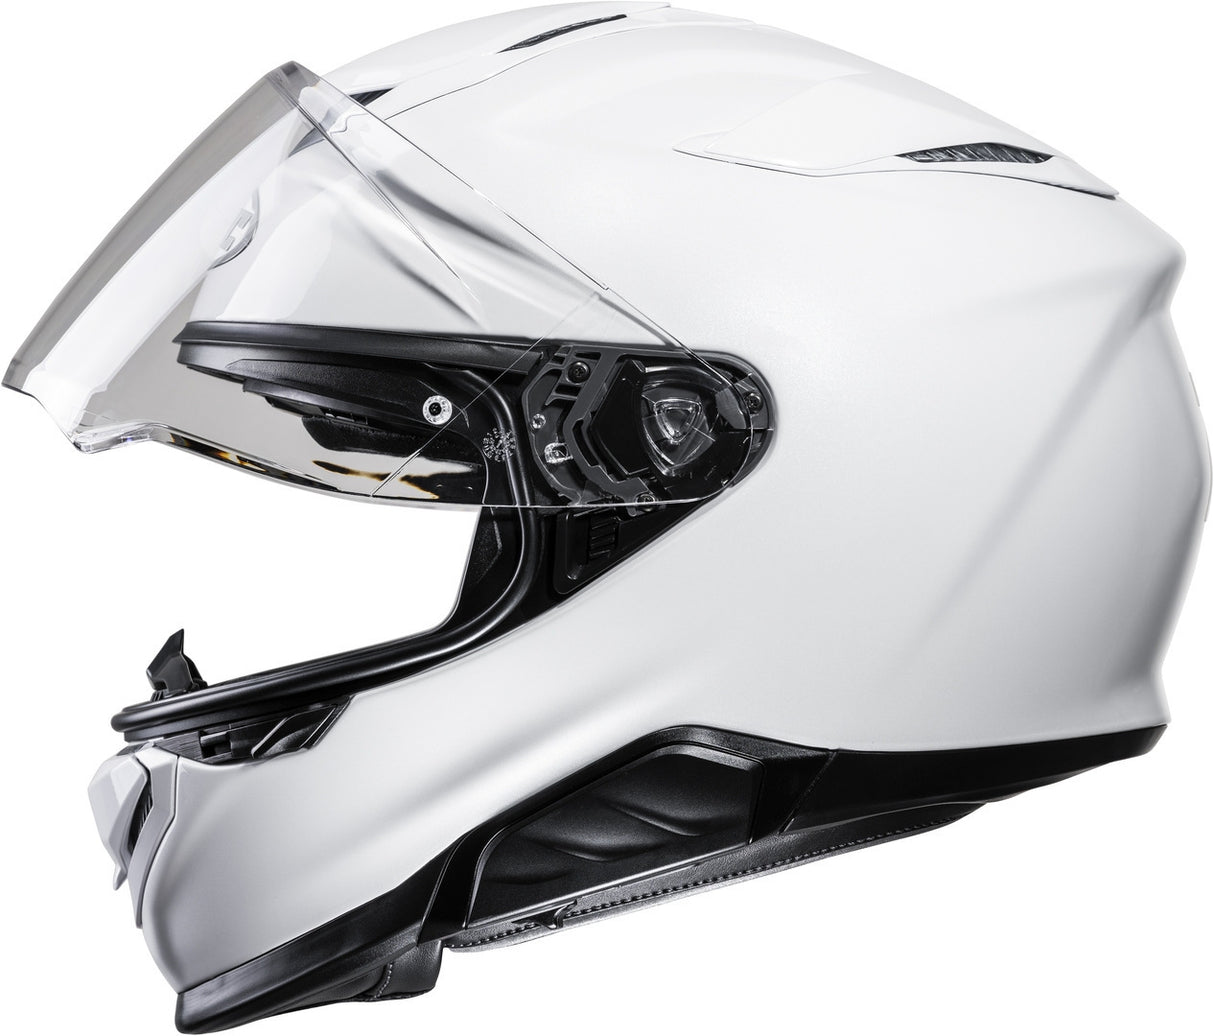 HJC RPHA 71 Helmet - Pearl White